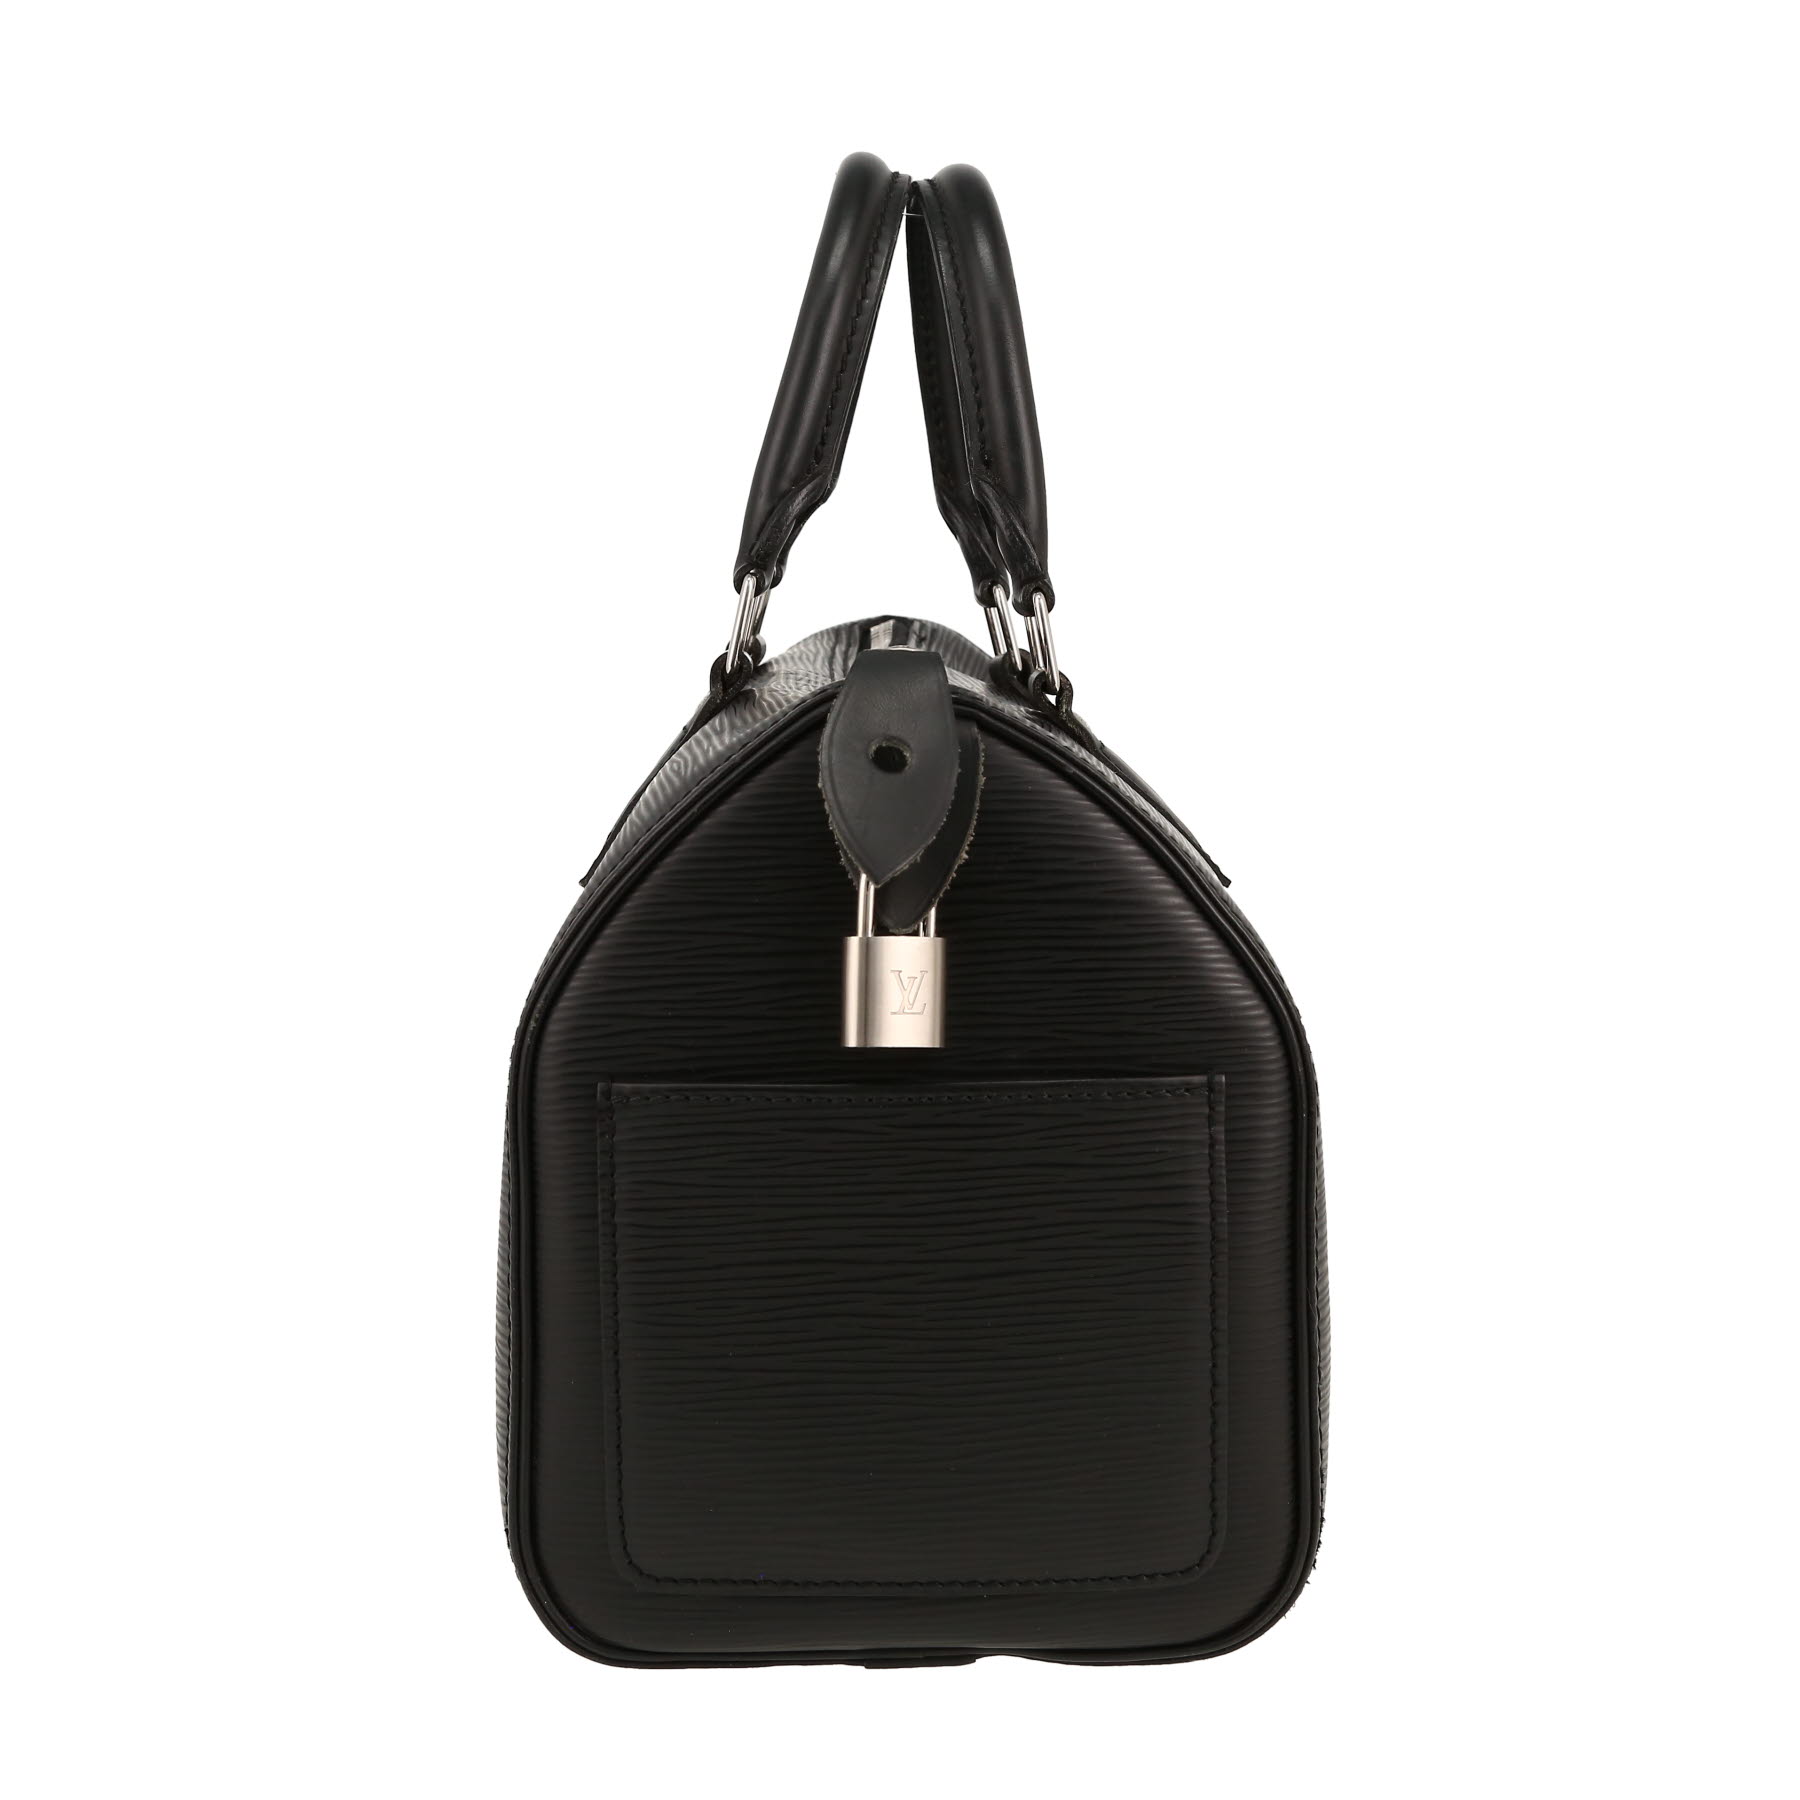 Speedy 30 Handbag In Black Epi Leather